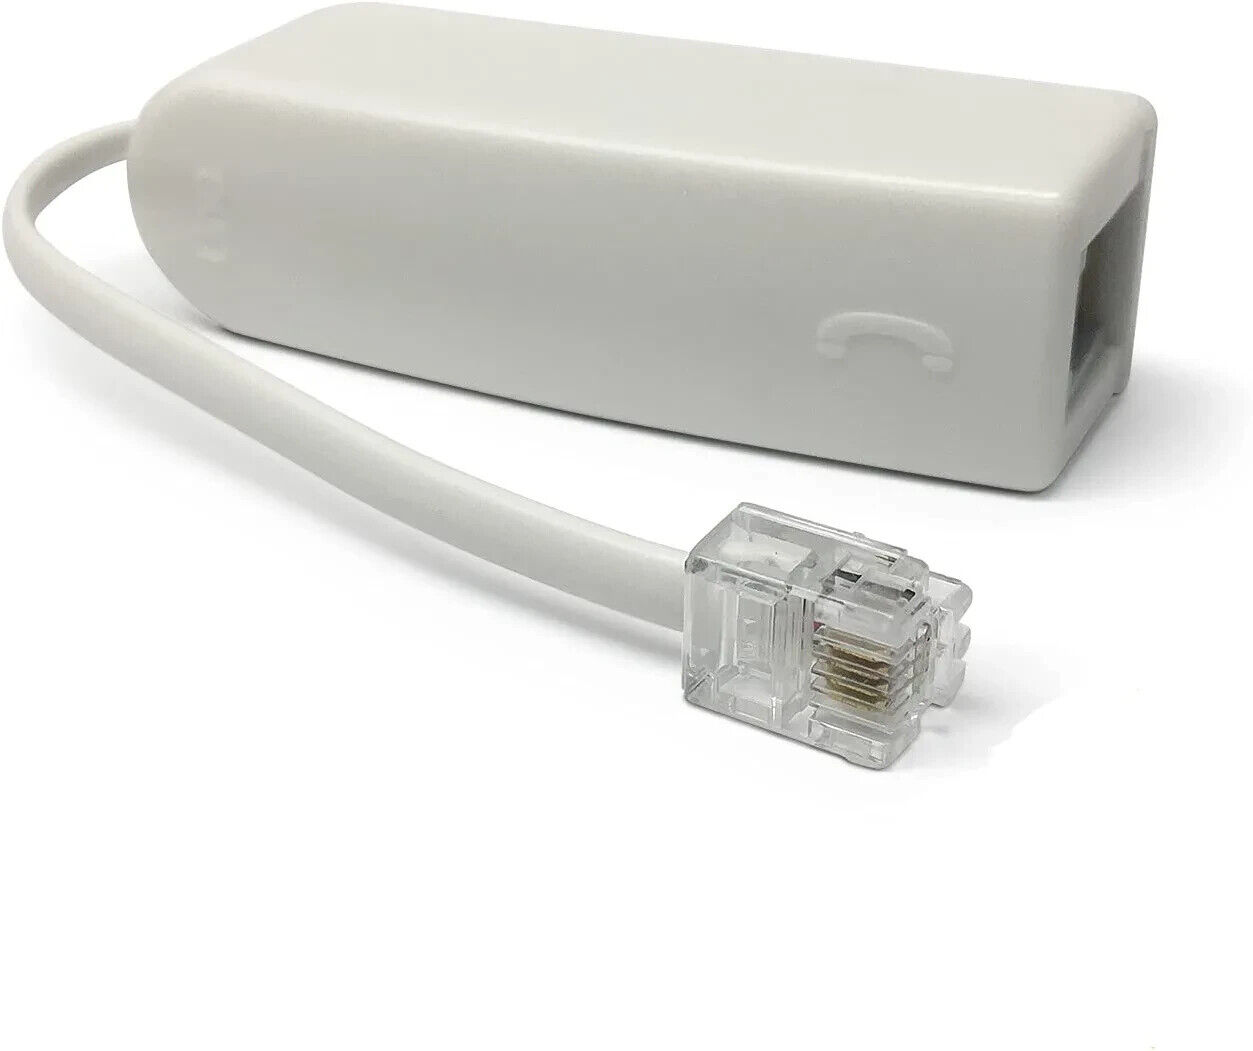 DSL Phone Line Noise Filter Adapter for DSL Modem Router Fax ADSL VDSL Router